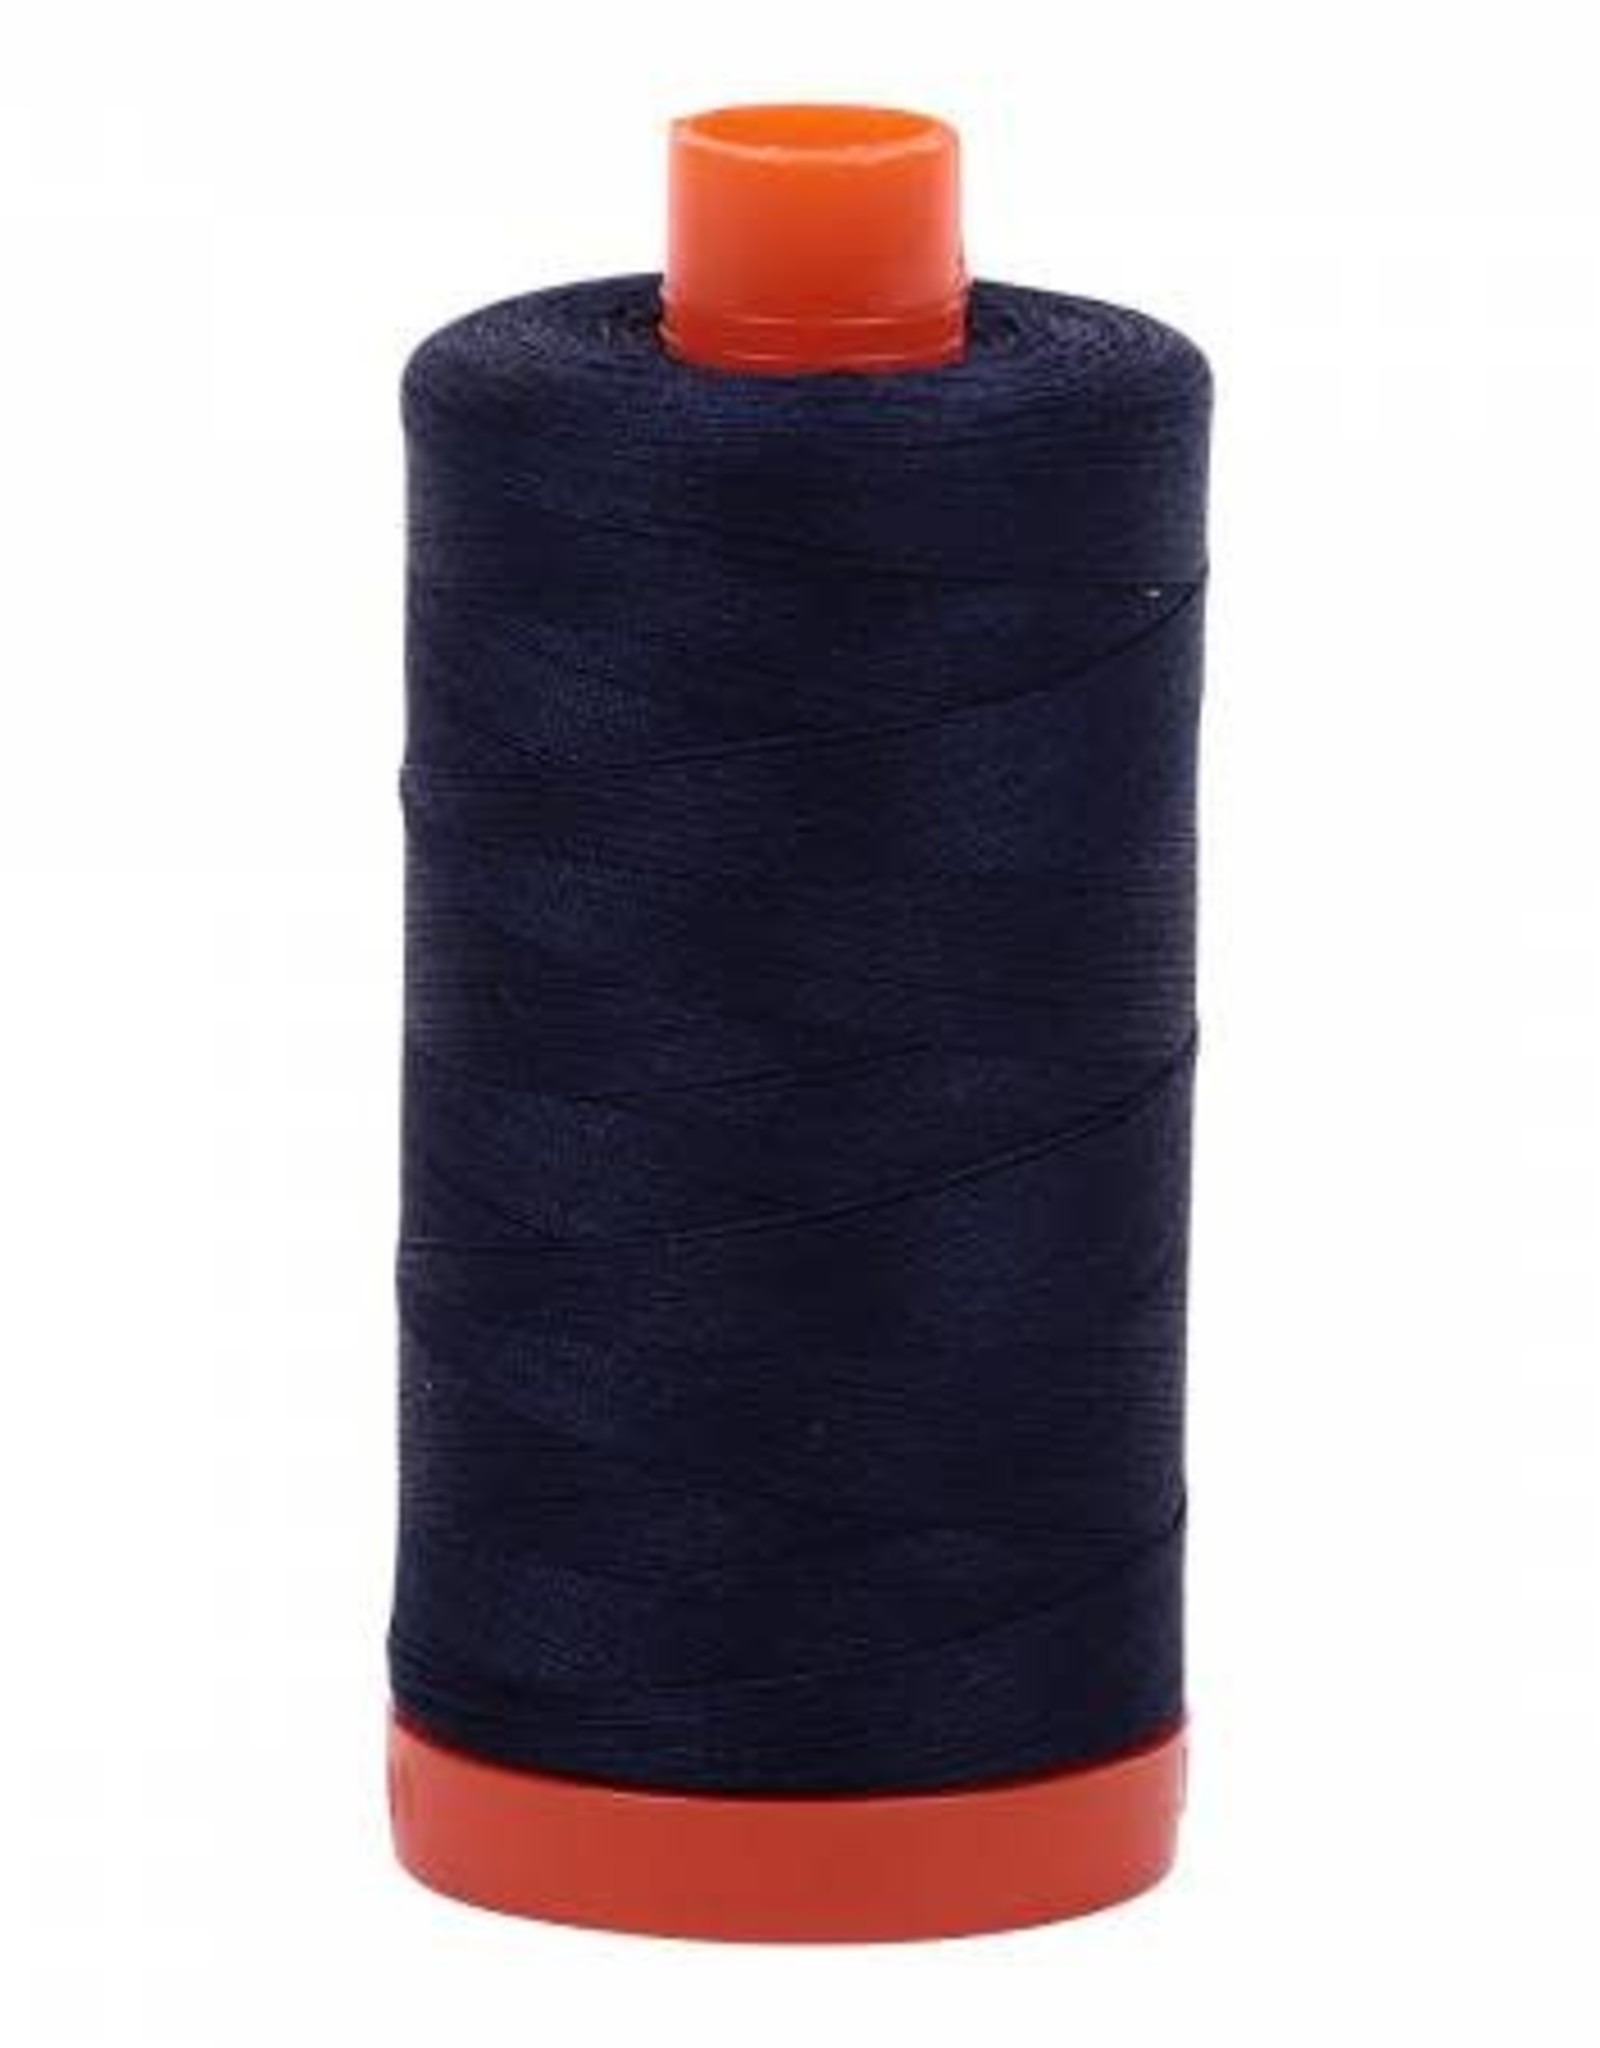 Mako Cotton Thread Solid 50wt - Very Dark Navy (2785)